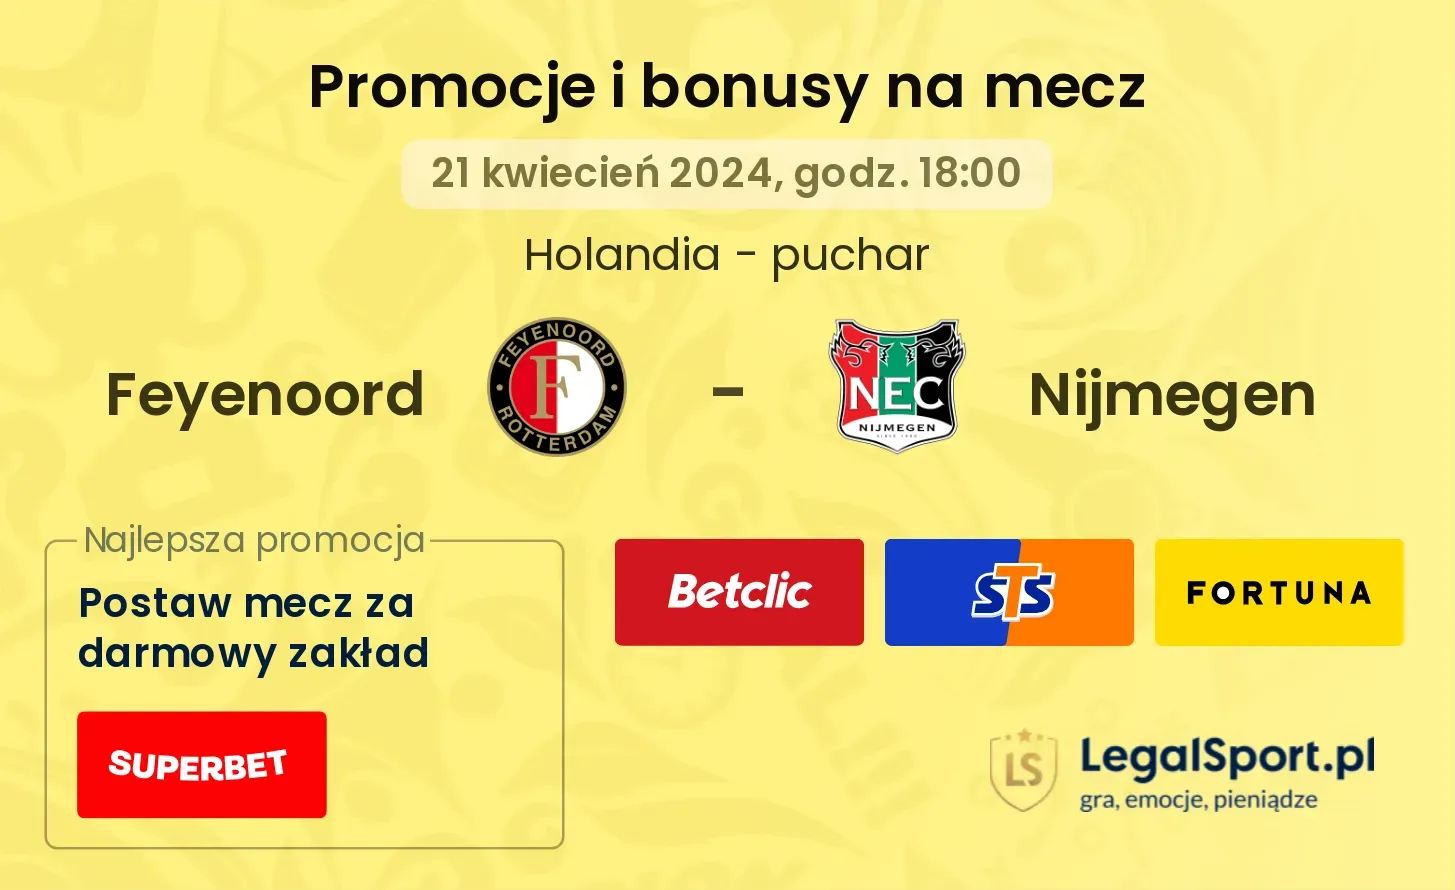 Feyenoord - Nijmegen promocje bonusy na mecz